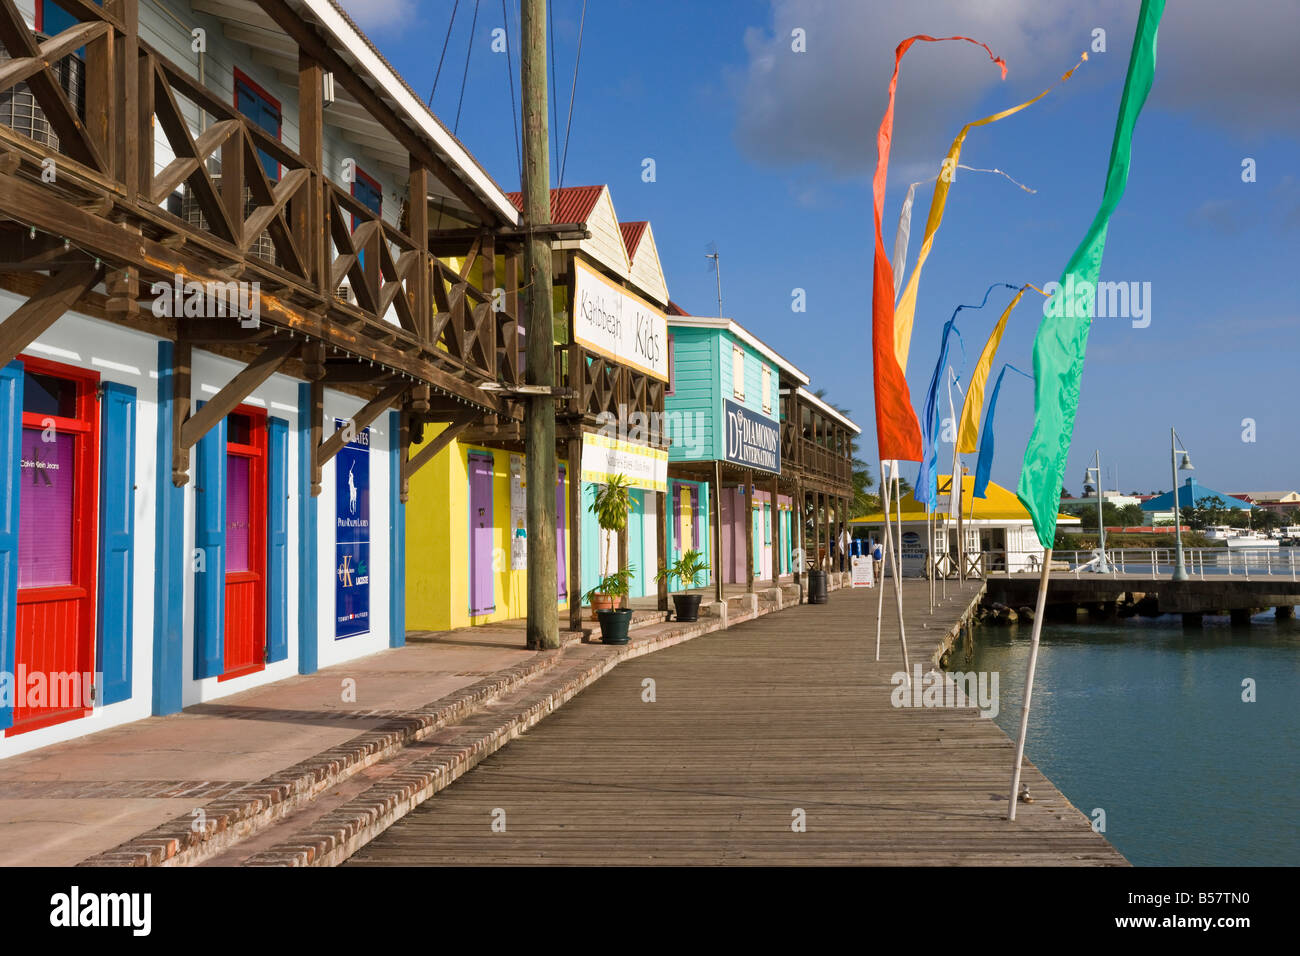 Heritage Quay Shopping District In St Johns Antigua Leeward Islands B57TN0 